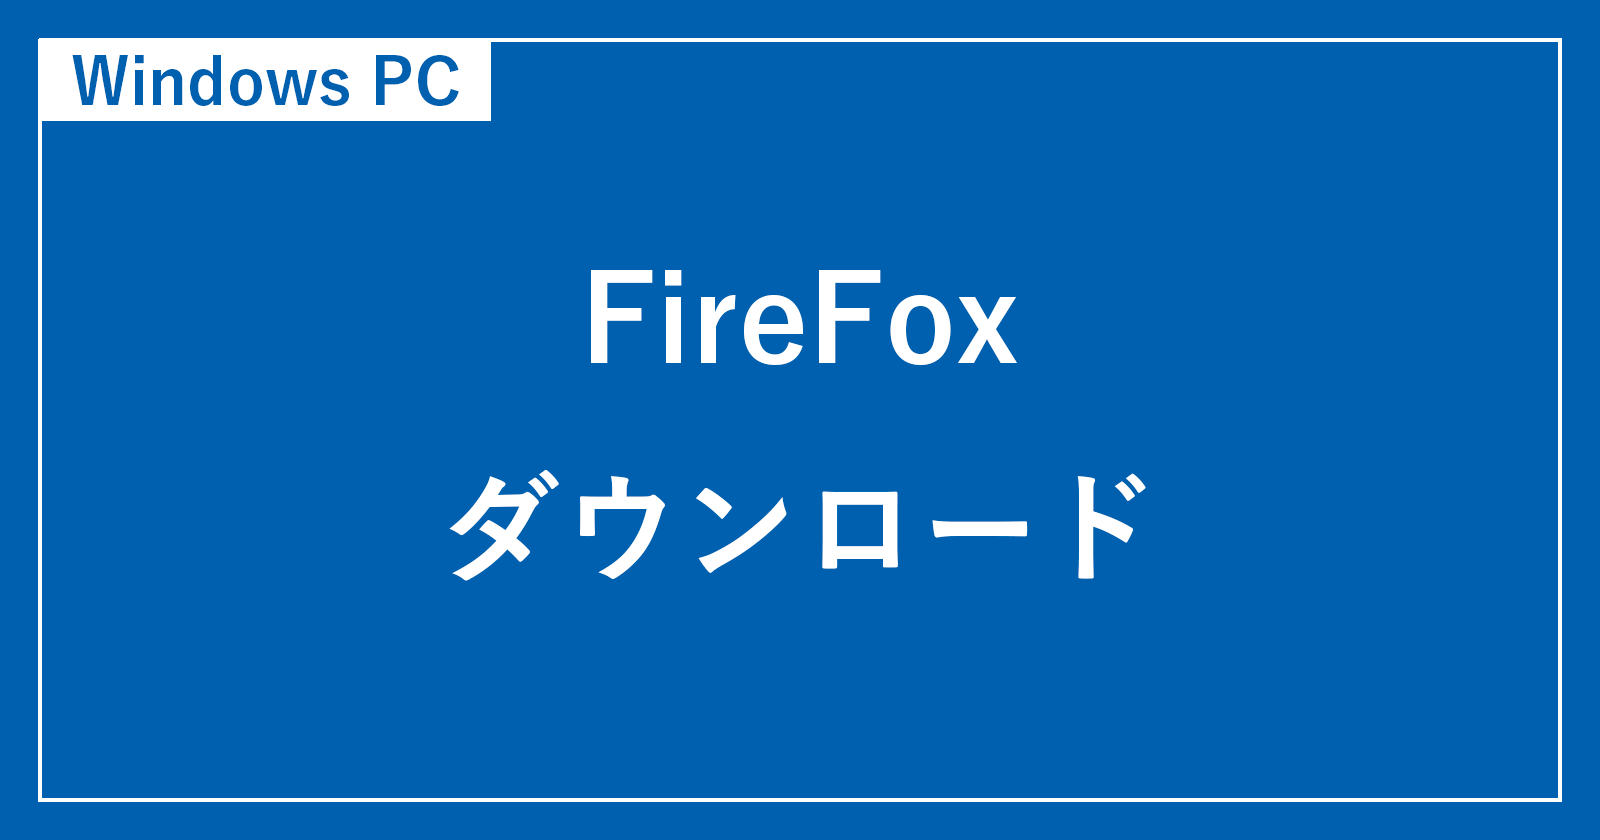 windows pc firefox download